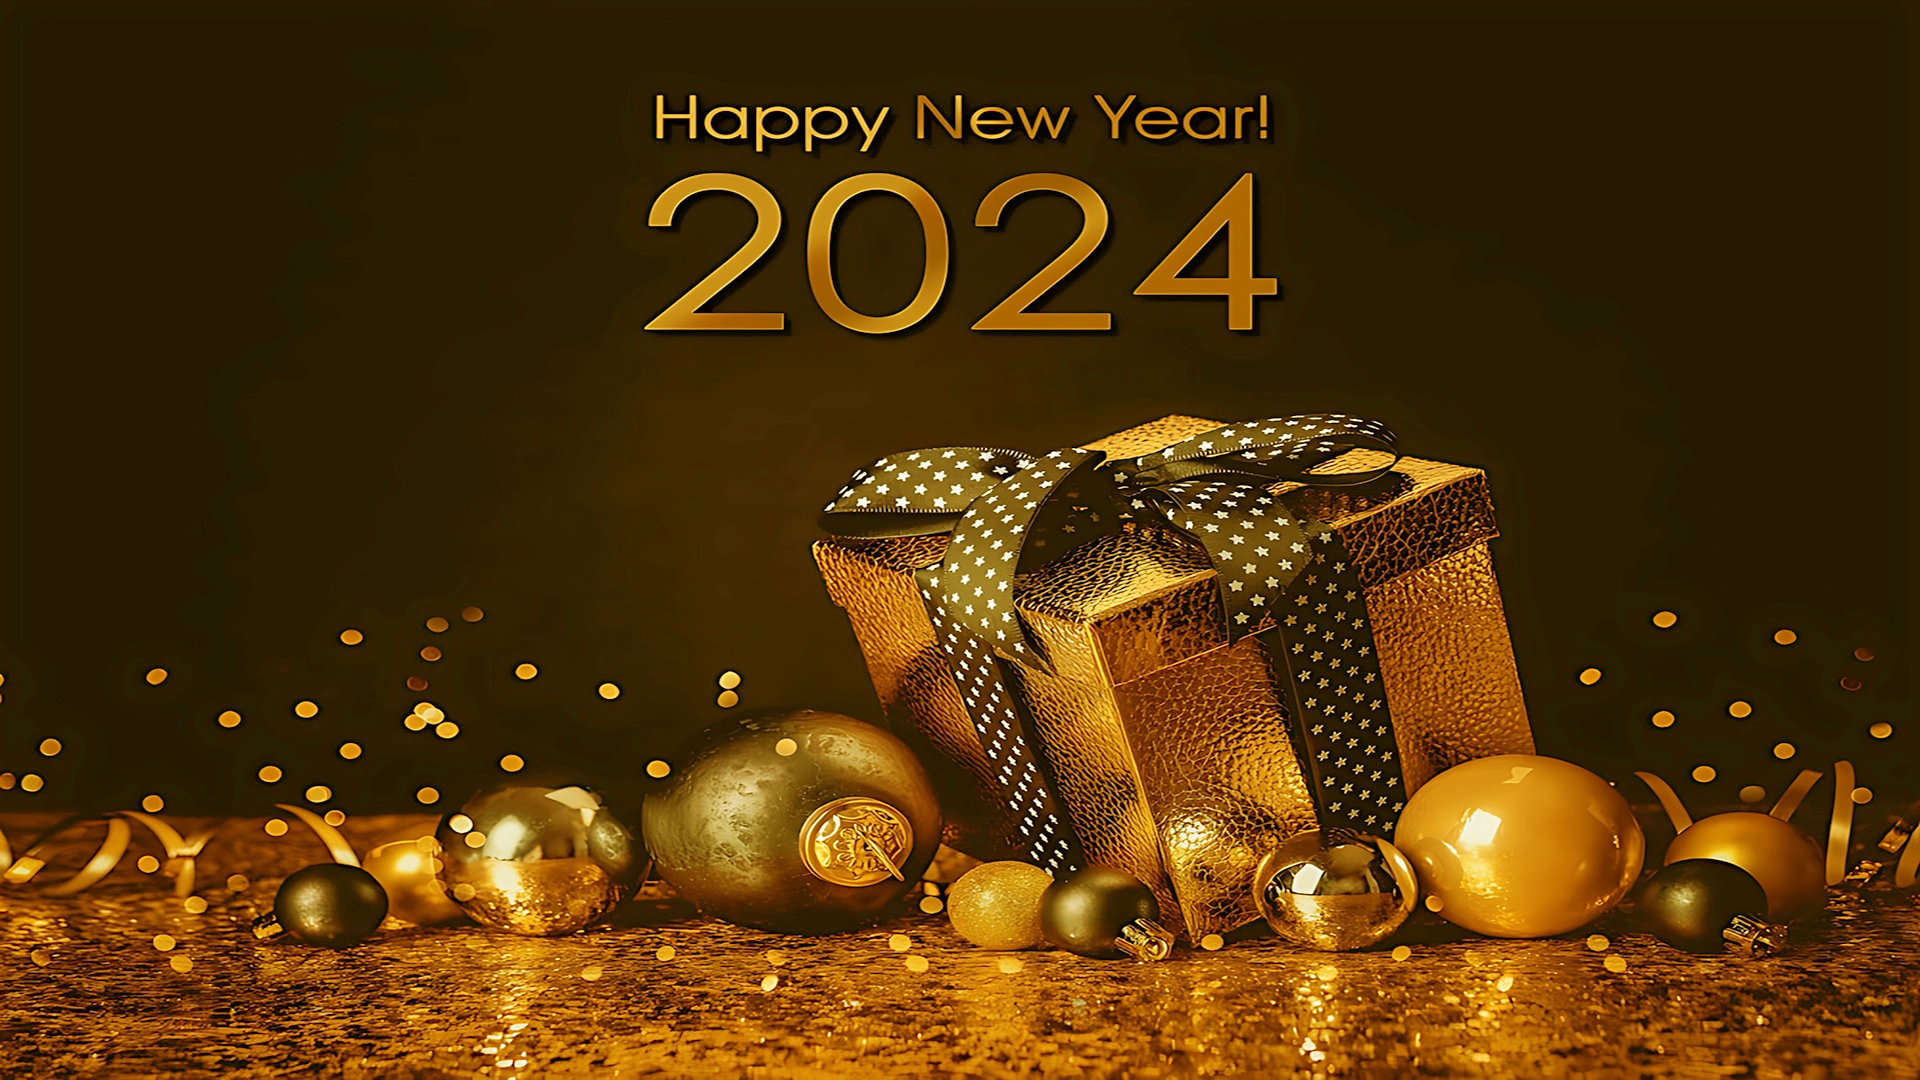 Happy new year desktop background 2024